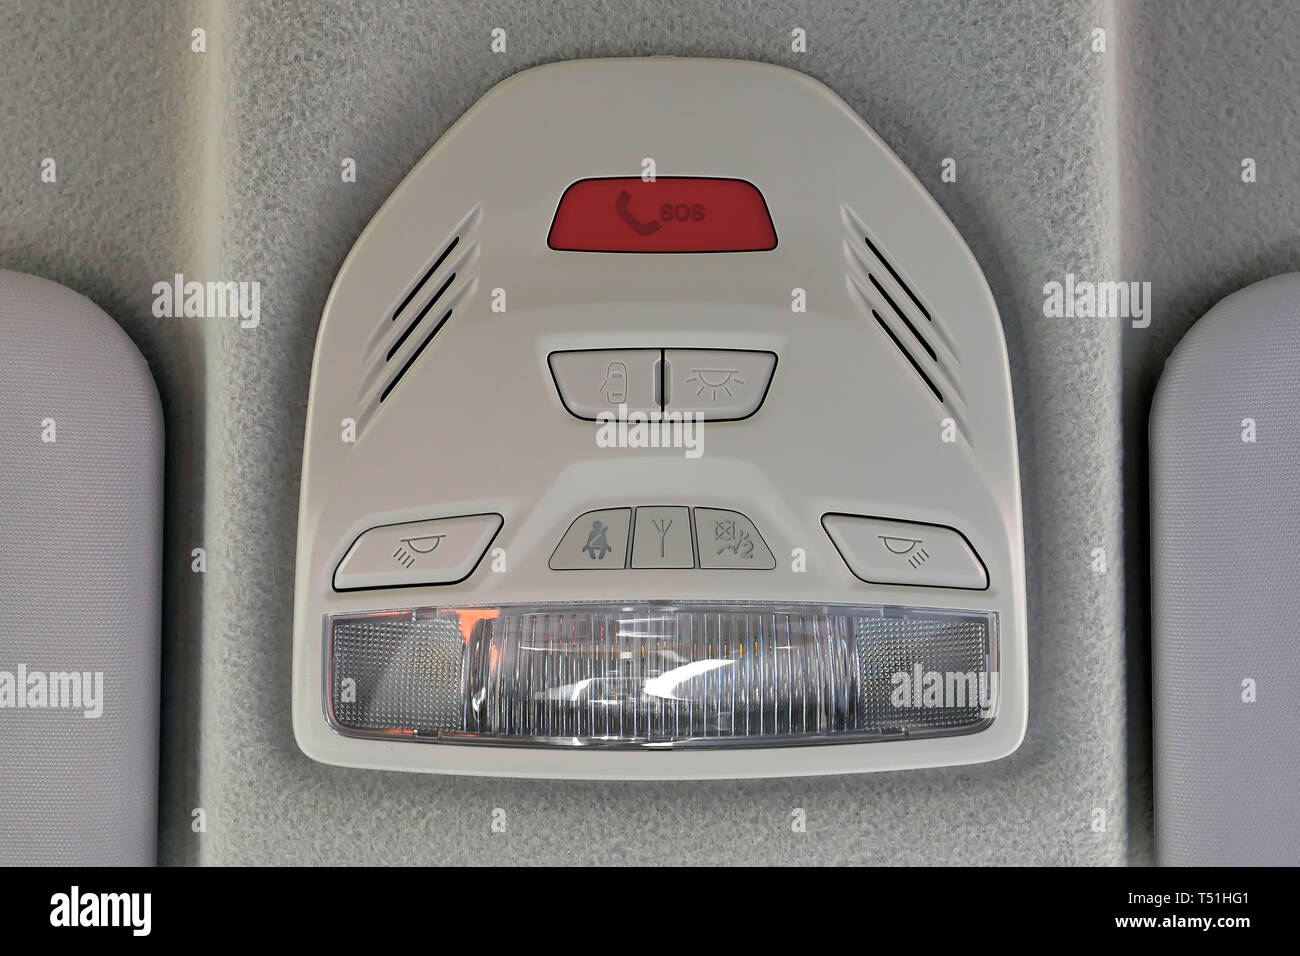 SOS button on the car panel. Luxury car interior Stock Photo